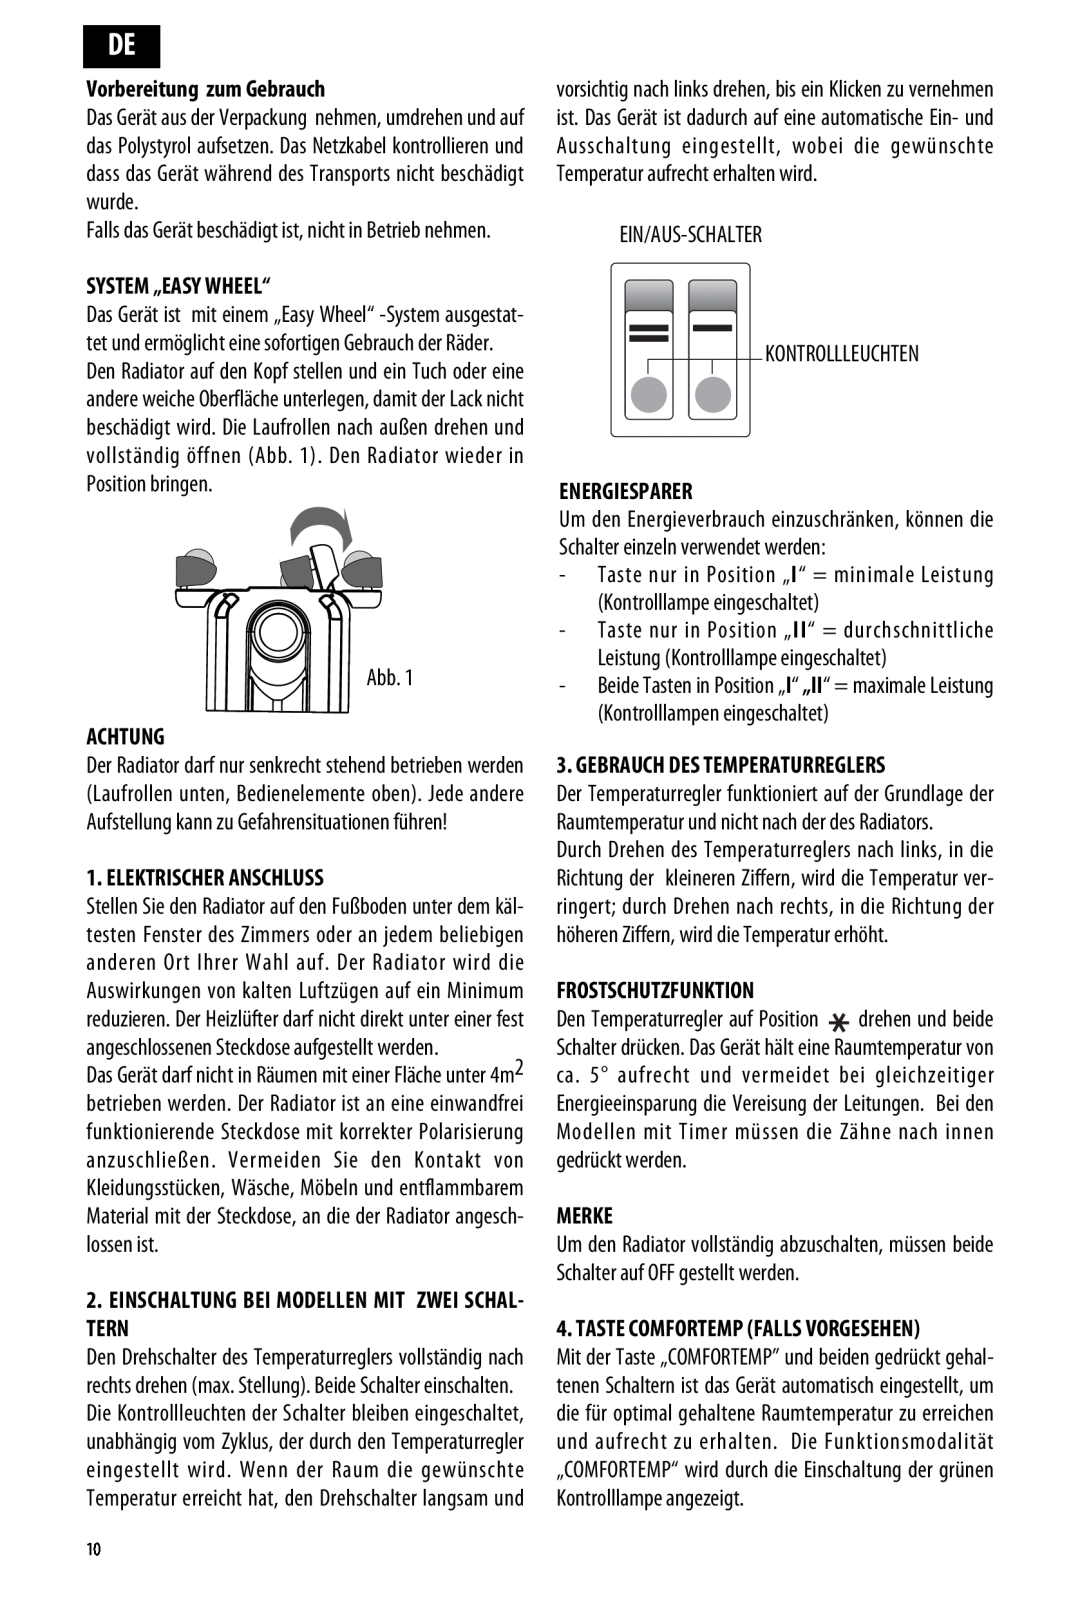 DeLonghi ME 10 manual Vorbereitung zum Gebrauch, System „Easy Wheel“, Achtung, Elektrischer Anschluss, Energiesparer, Merke 